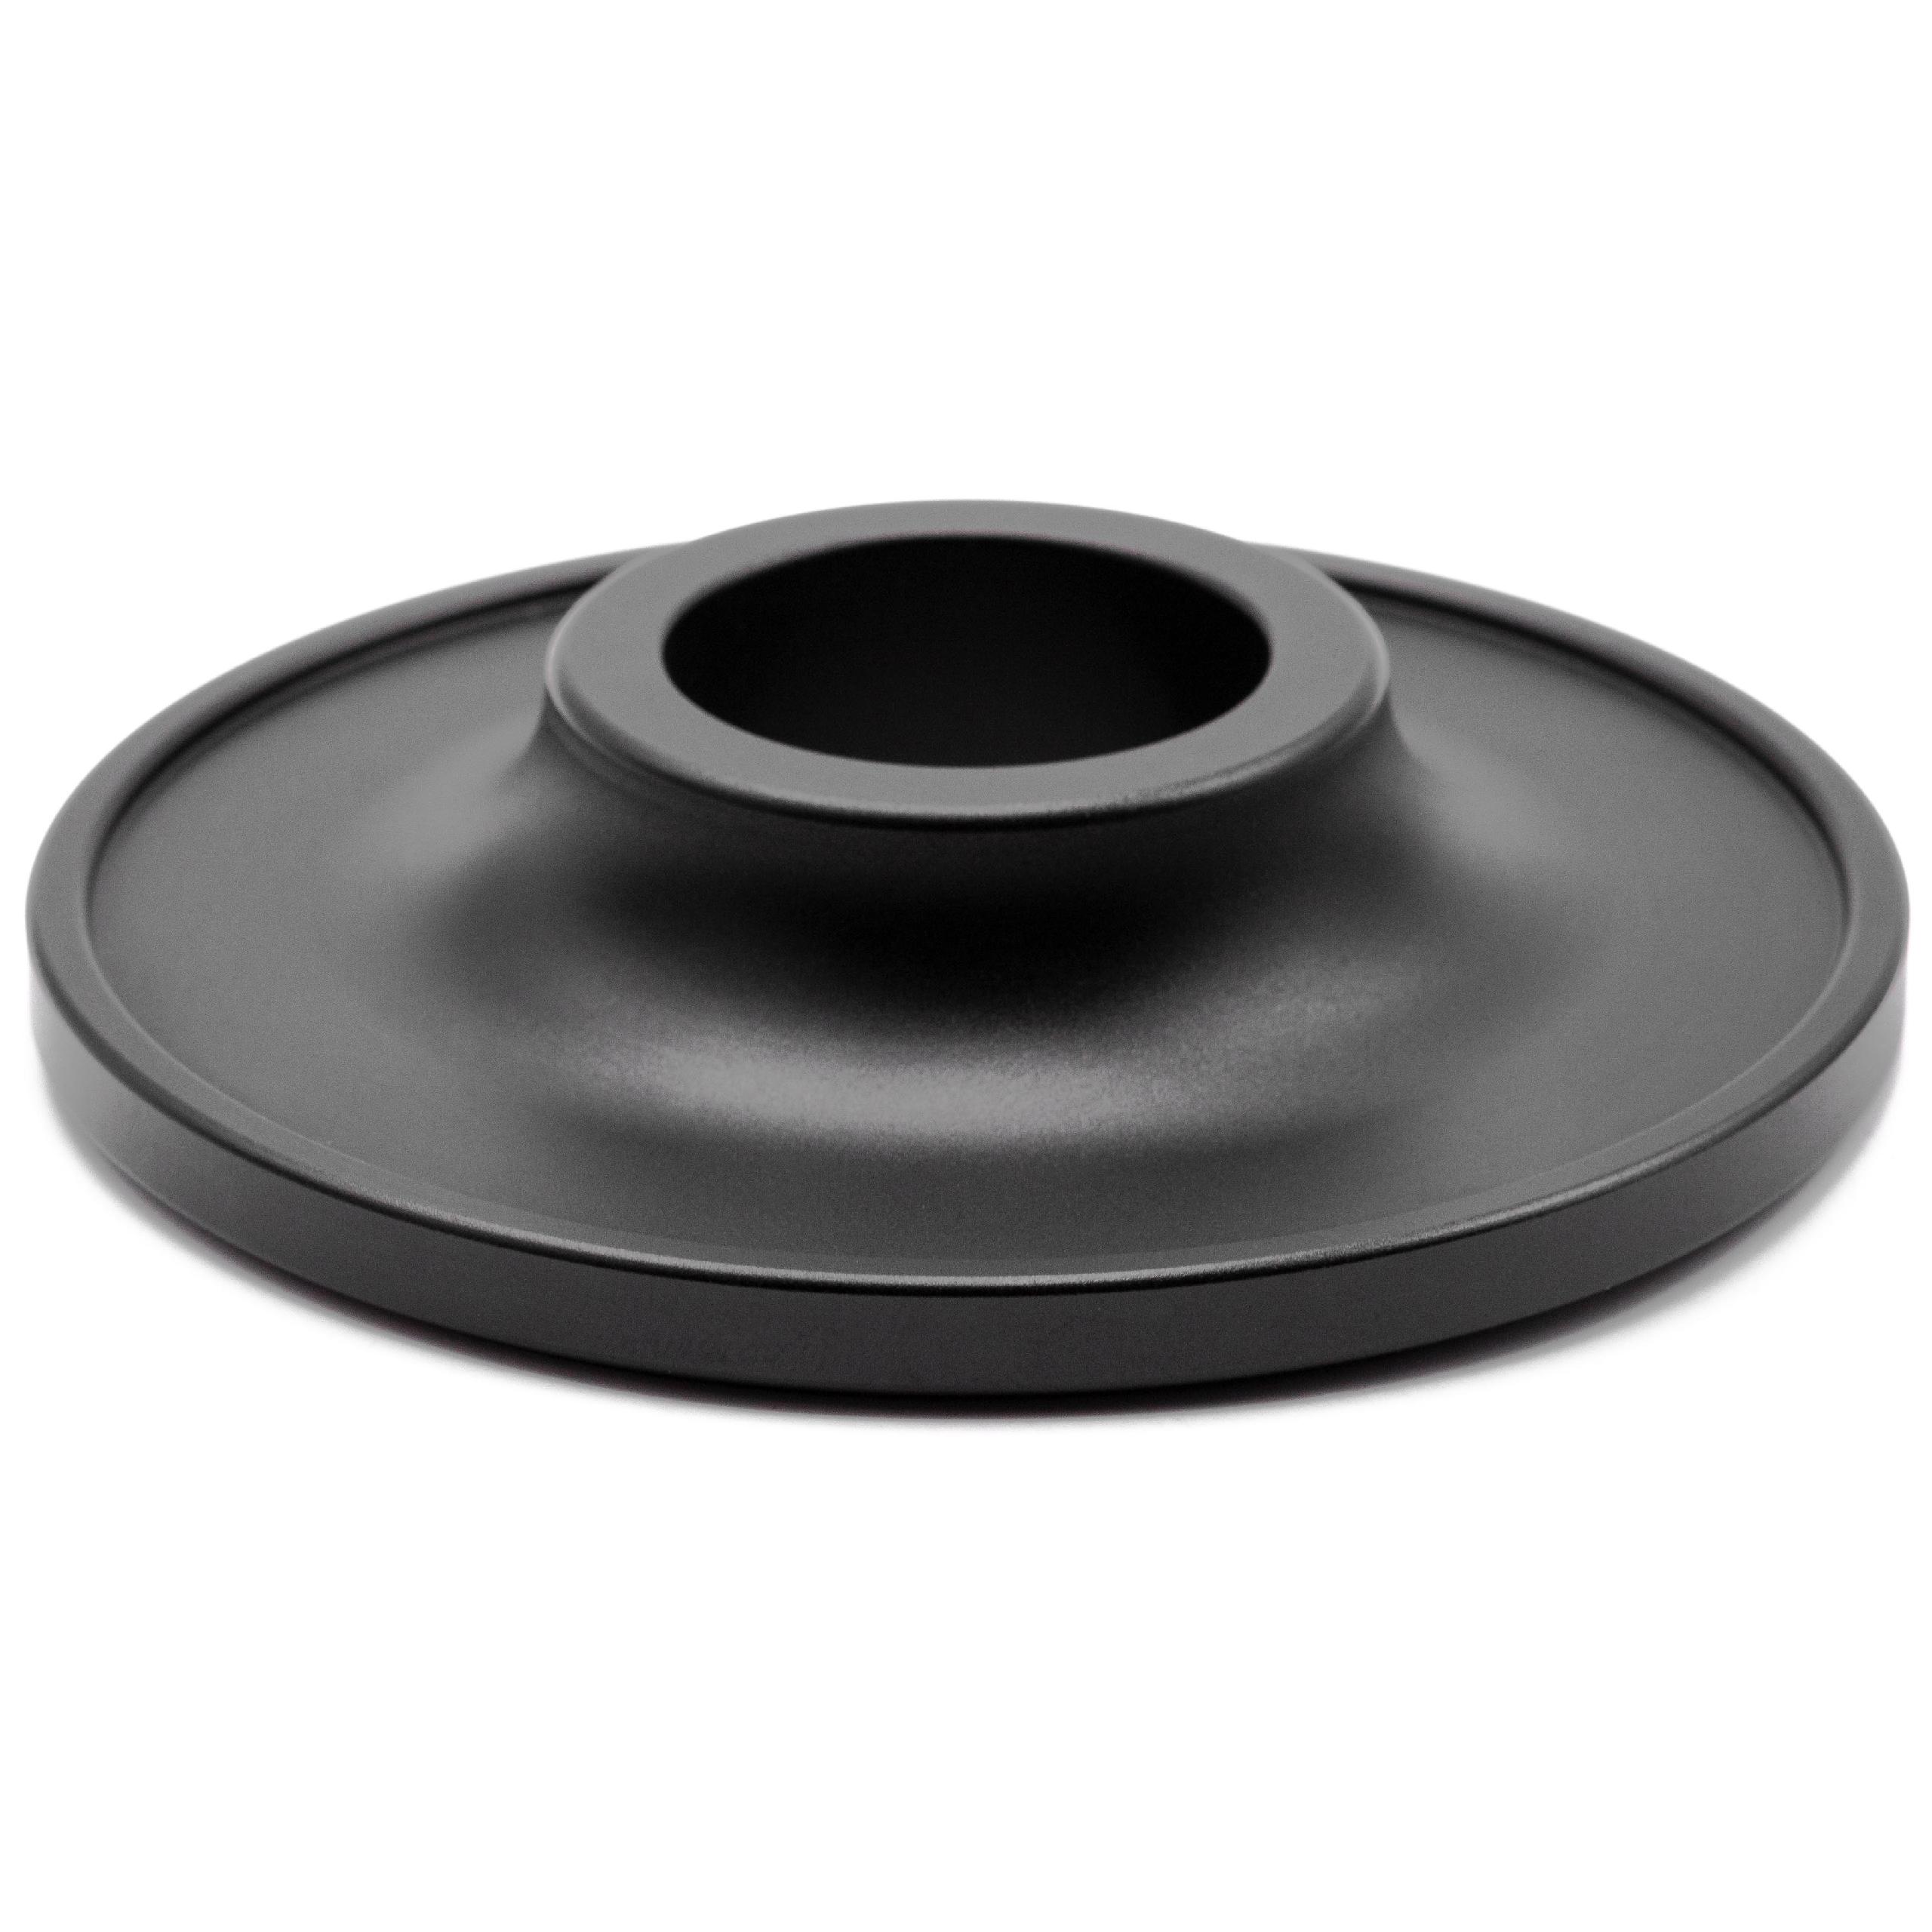 vhbw Anti-Slip Mat Speaker Stand Portable Speakers - Speaker Stands made of aluminium in black